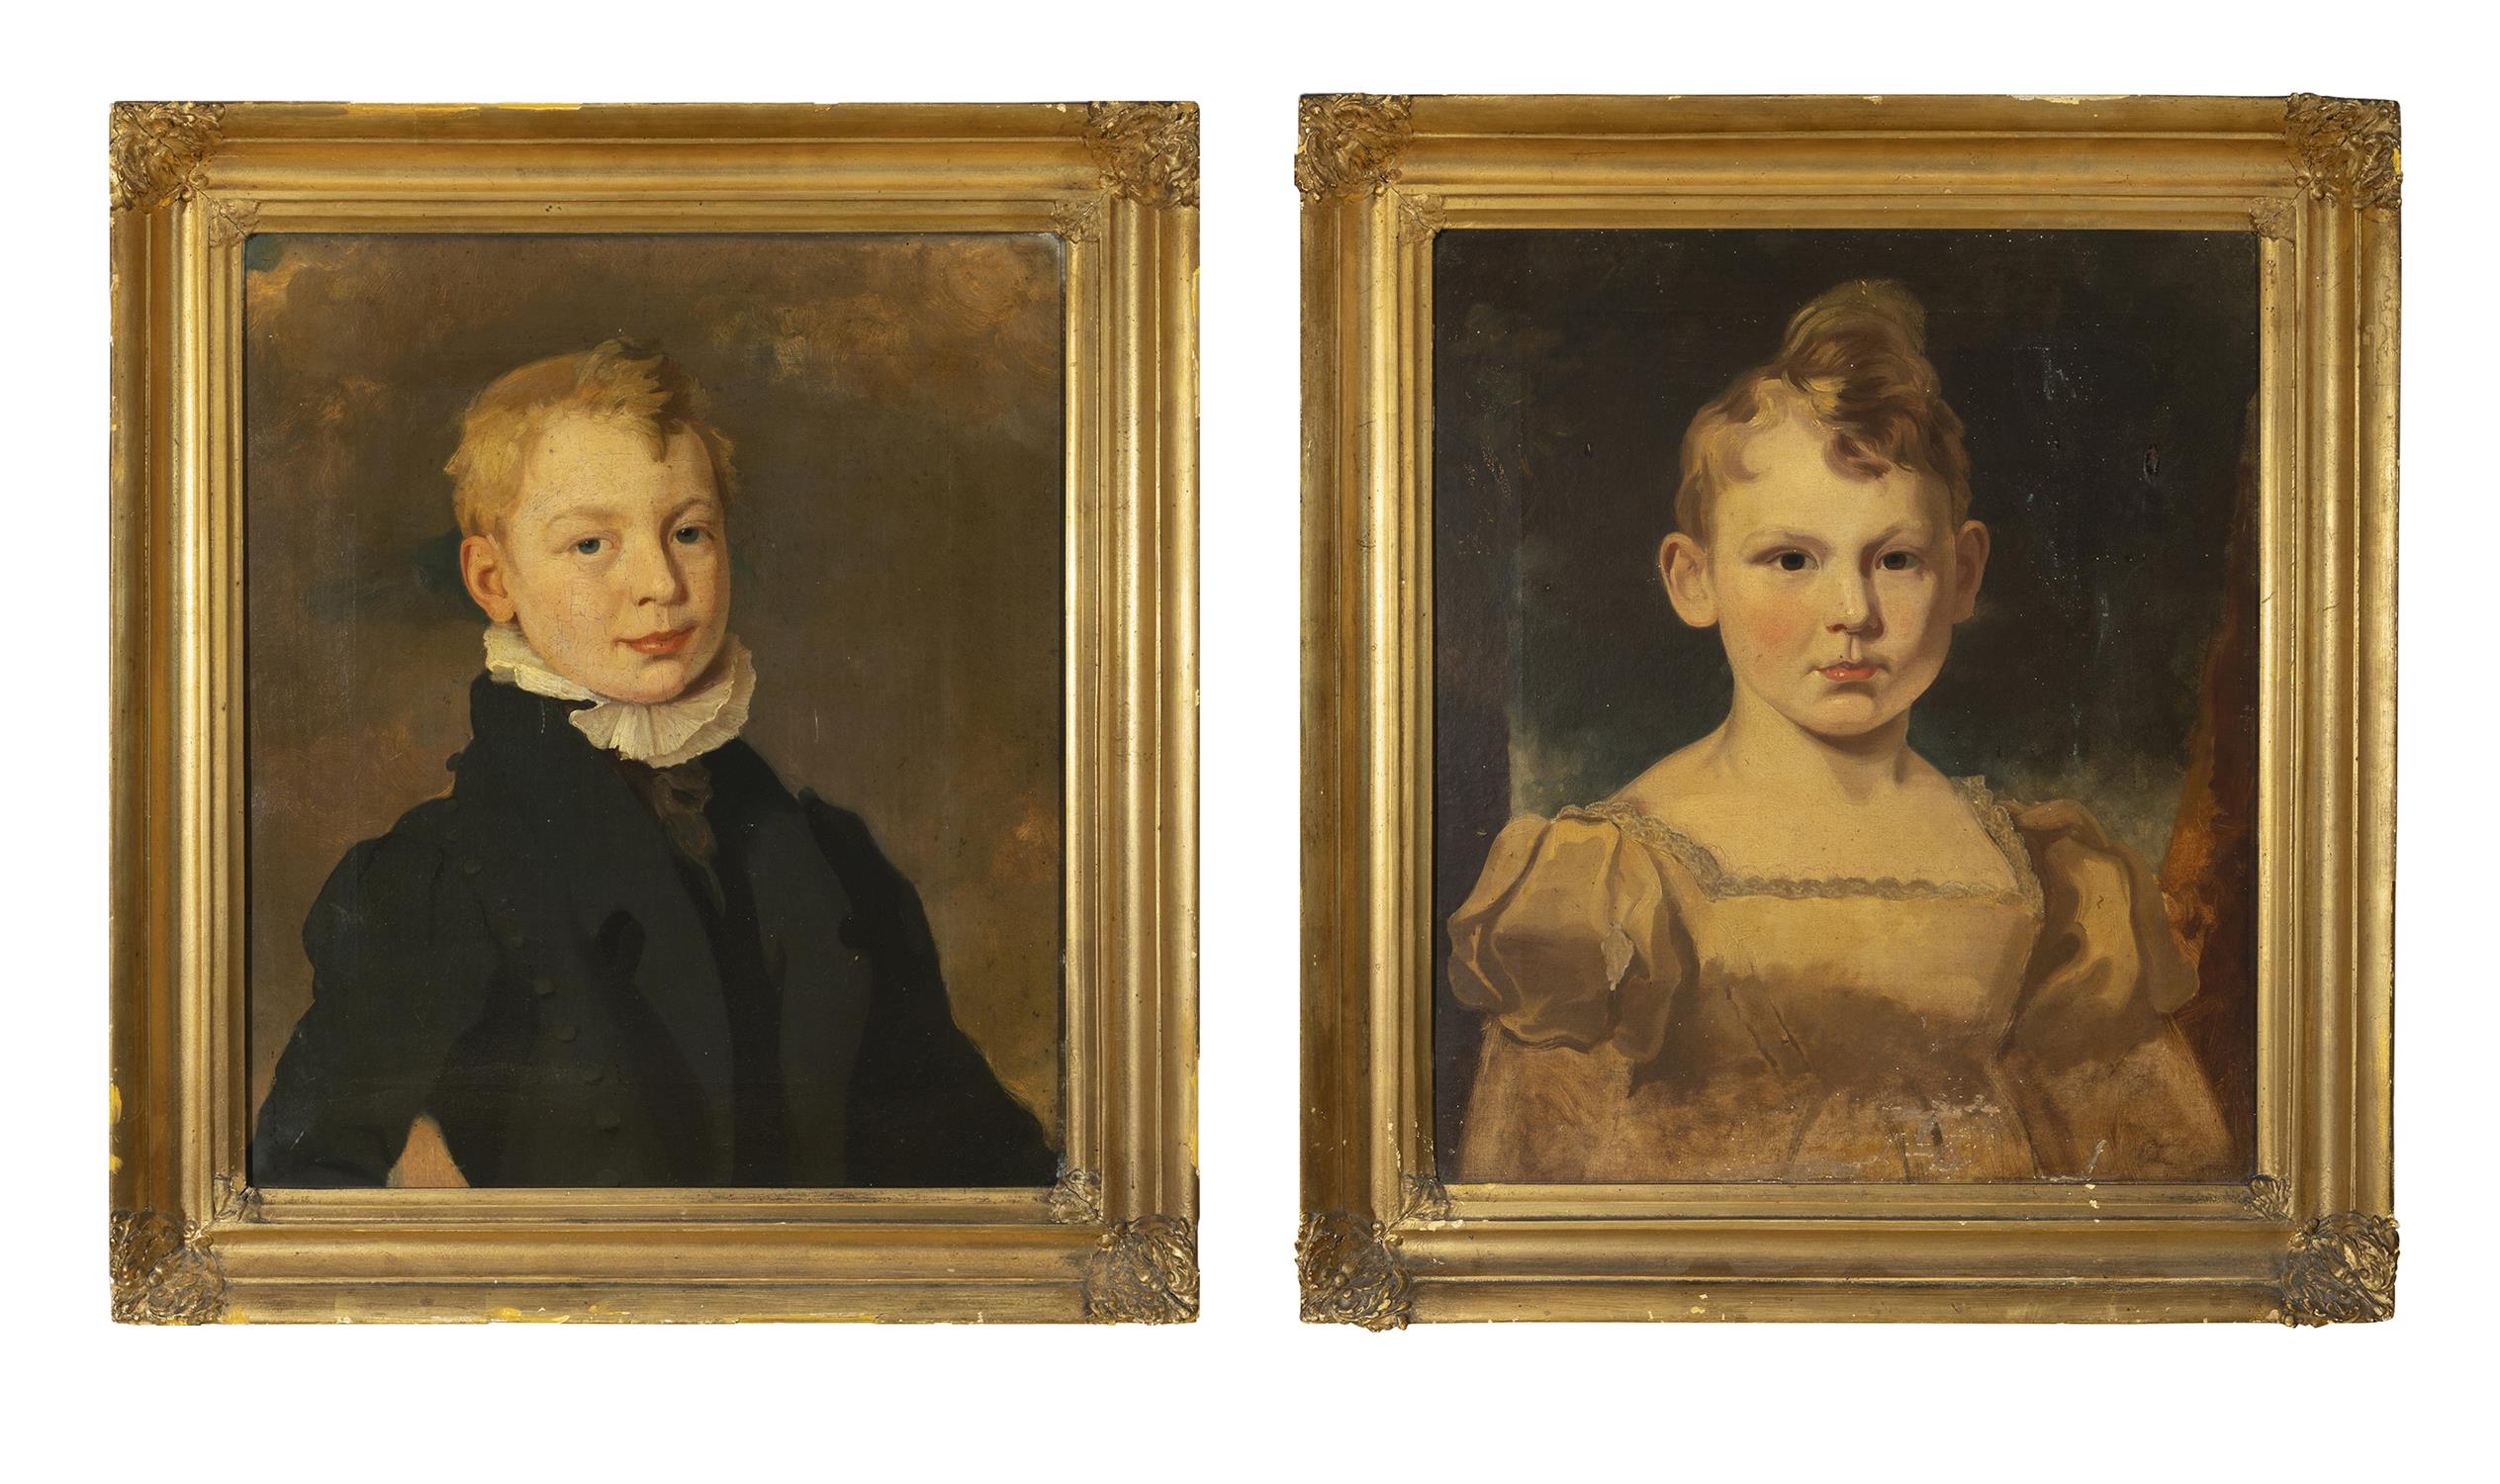 18TH CENTURY A pair of Portraits Oils on canvas, each 53.5 x 44cm